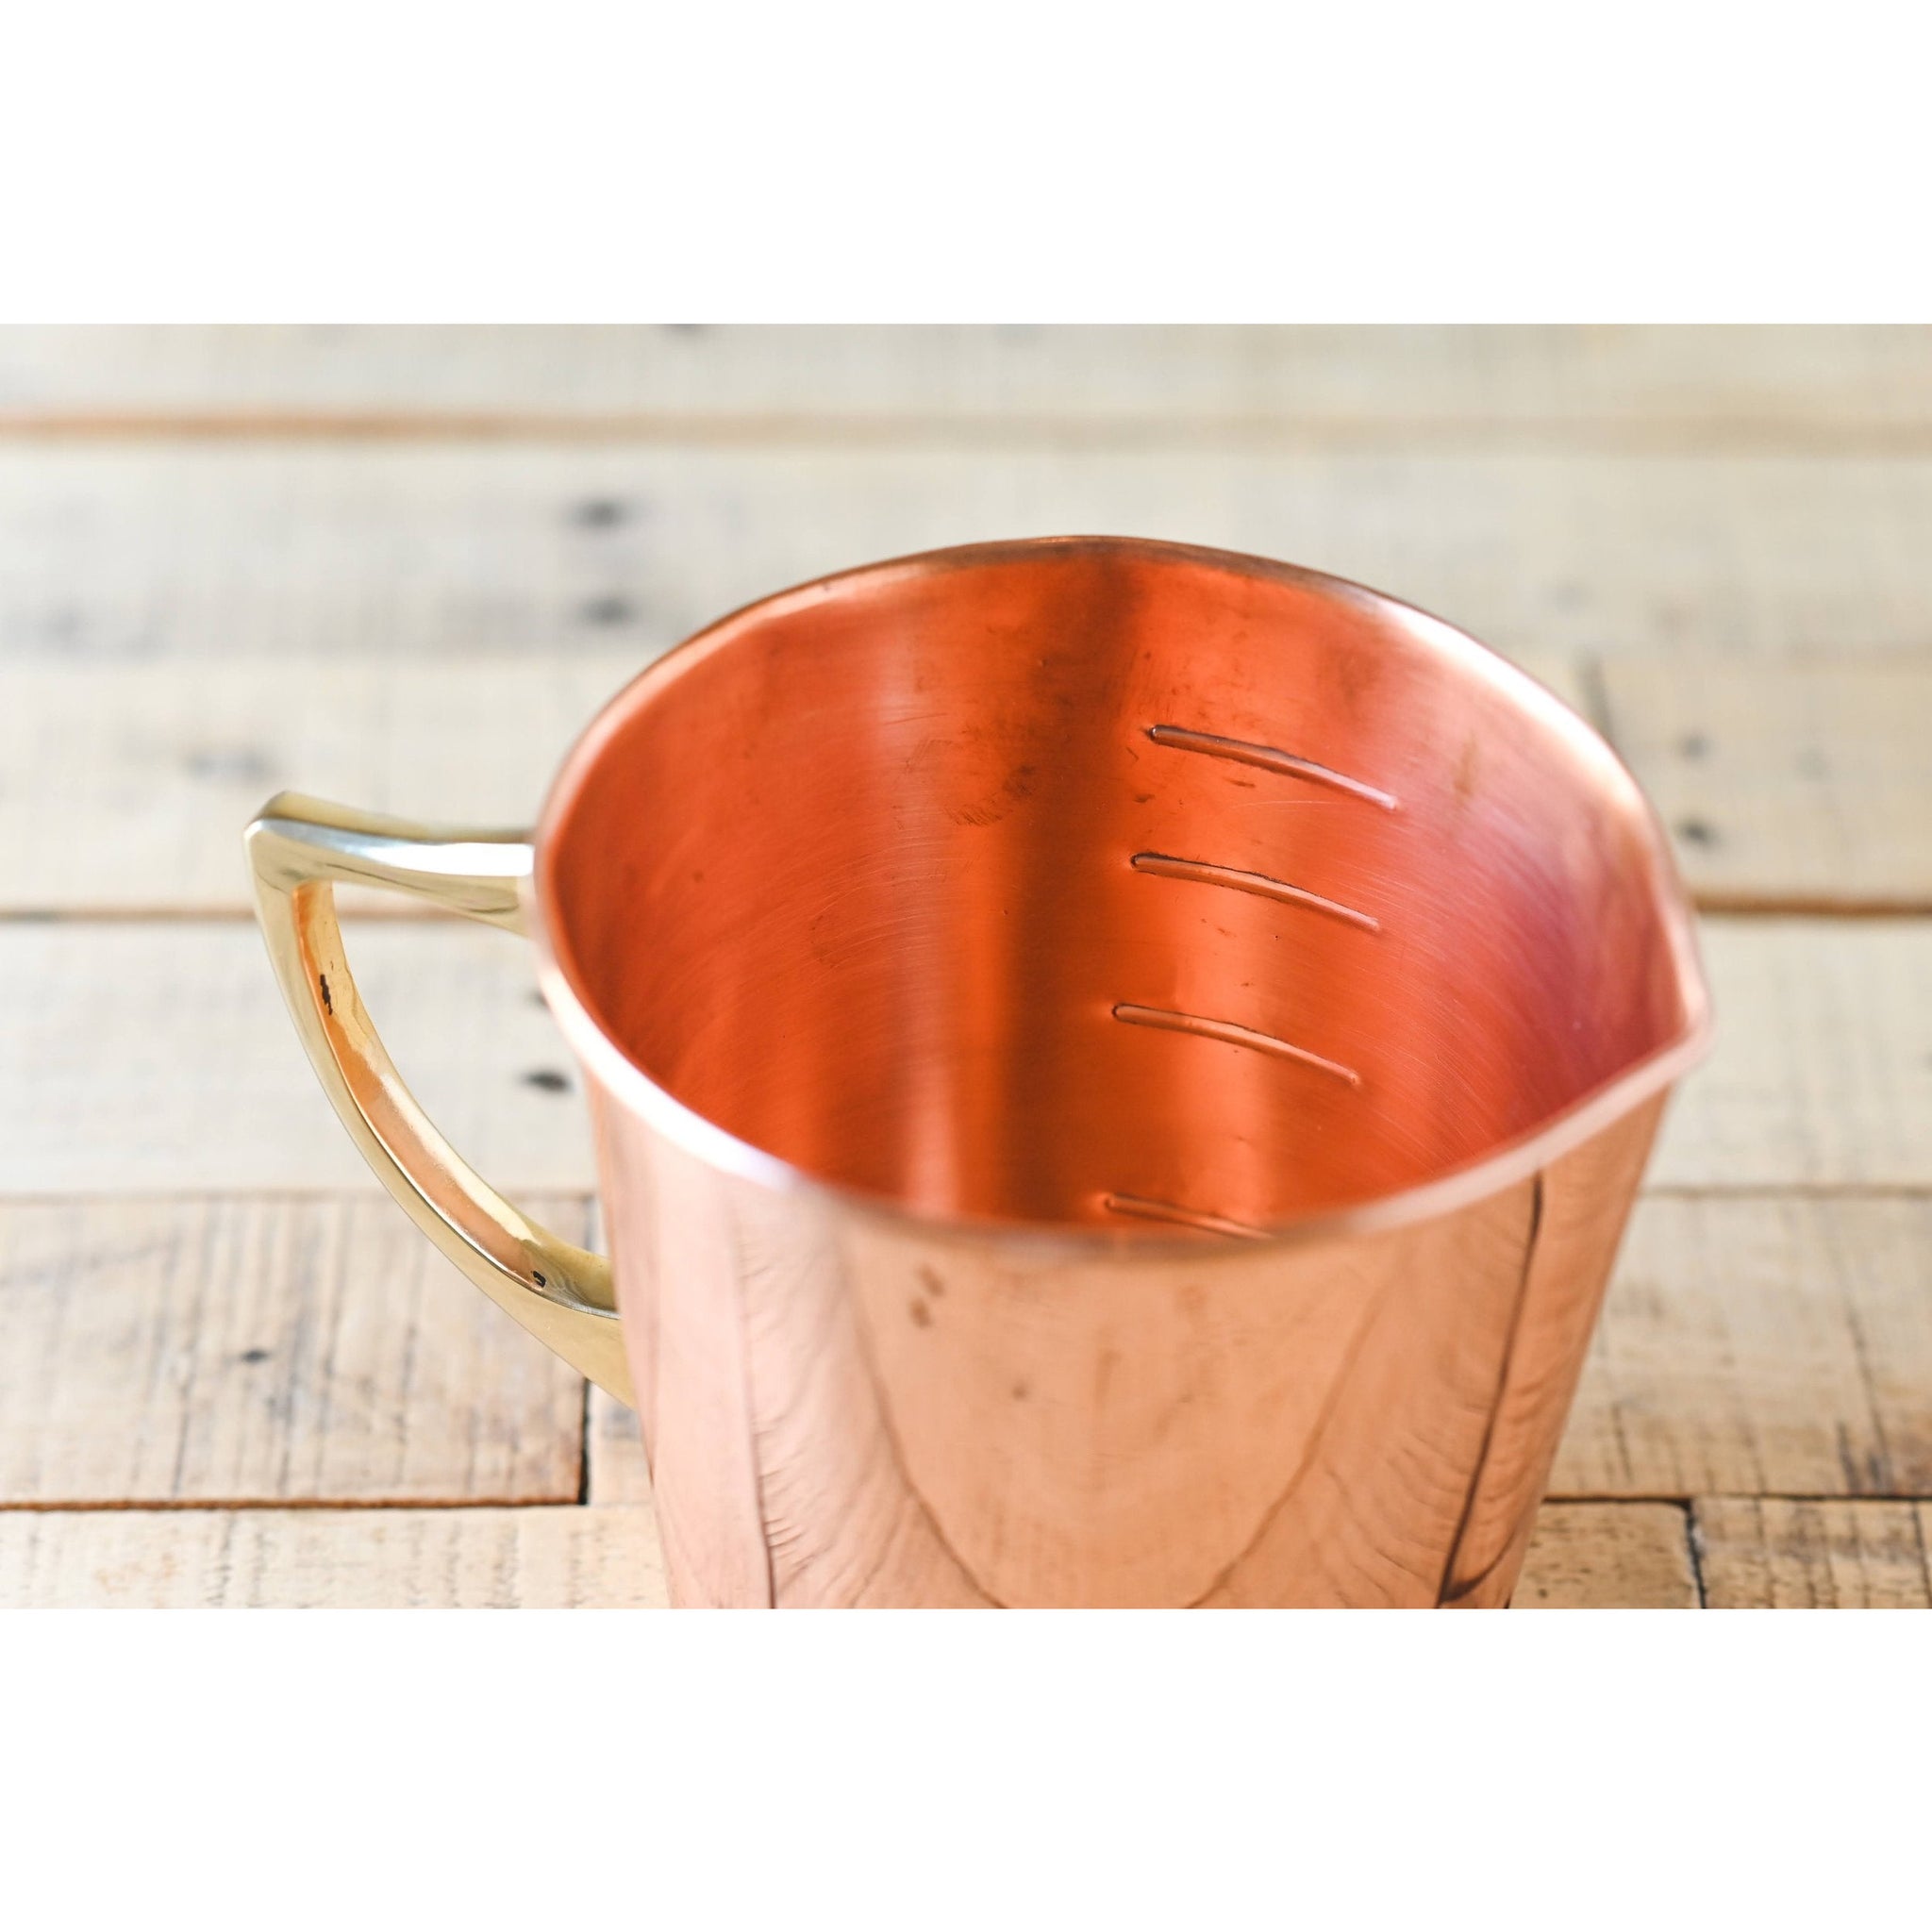 Copper Liquid Measuring Cup - 2.5 Cup